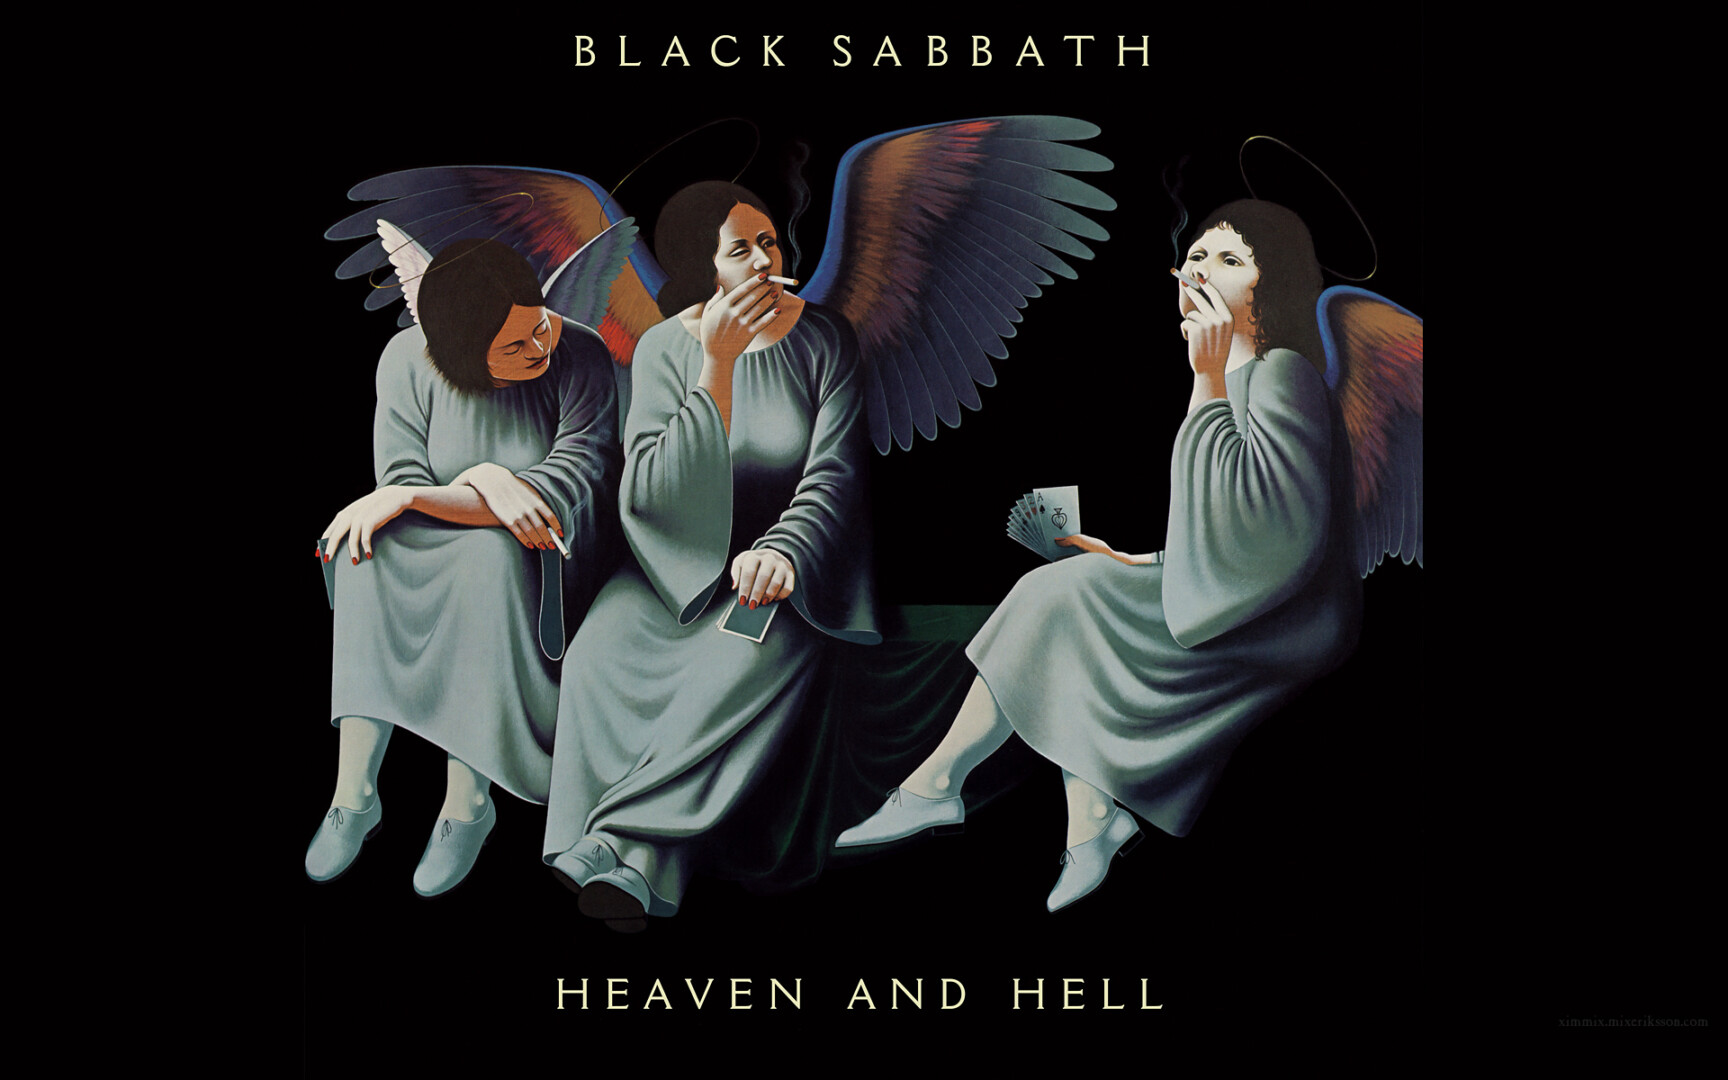 Black sabbath - heaven and hell.